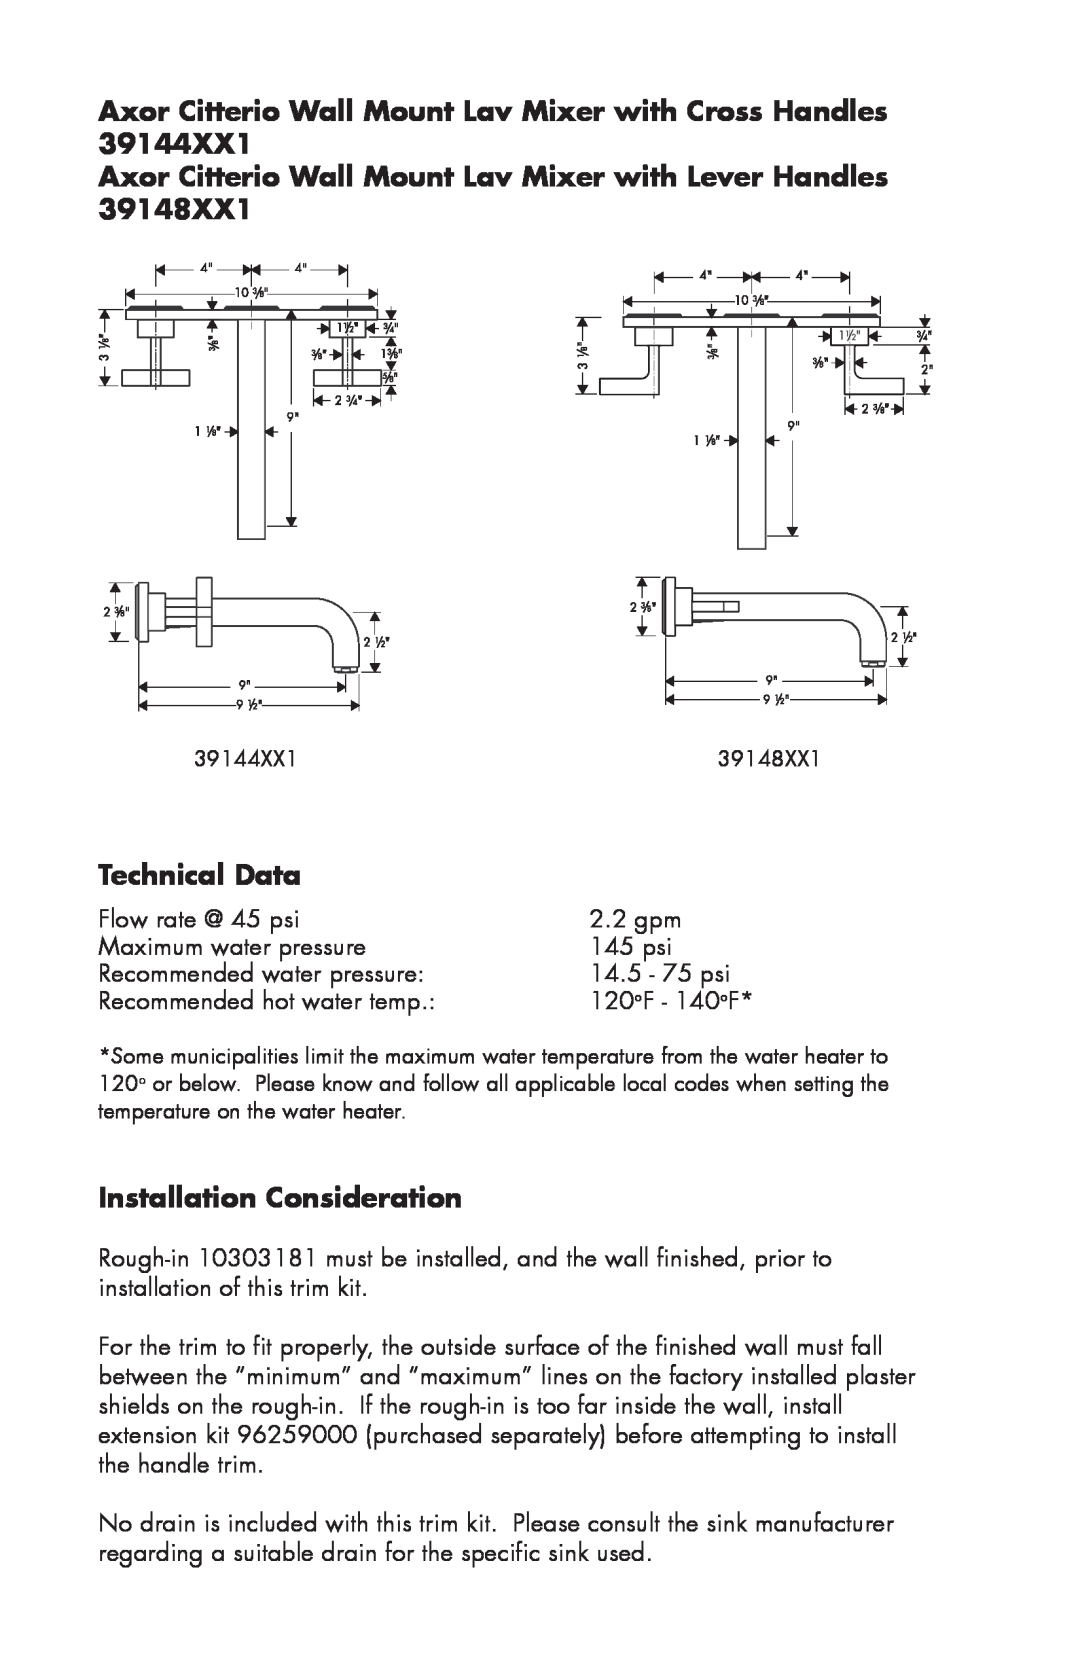 Axor 39144XX1 warranty Technical Data, Installation Consideration 